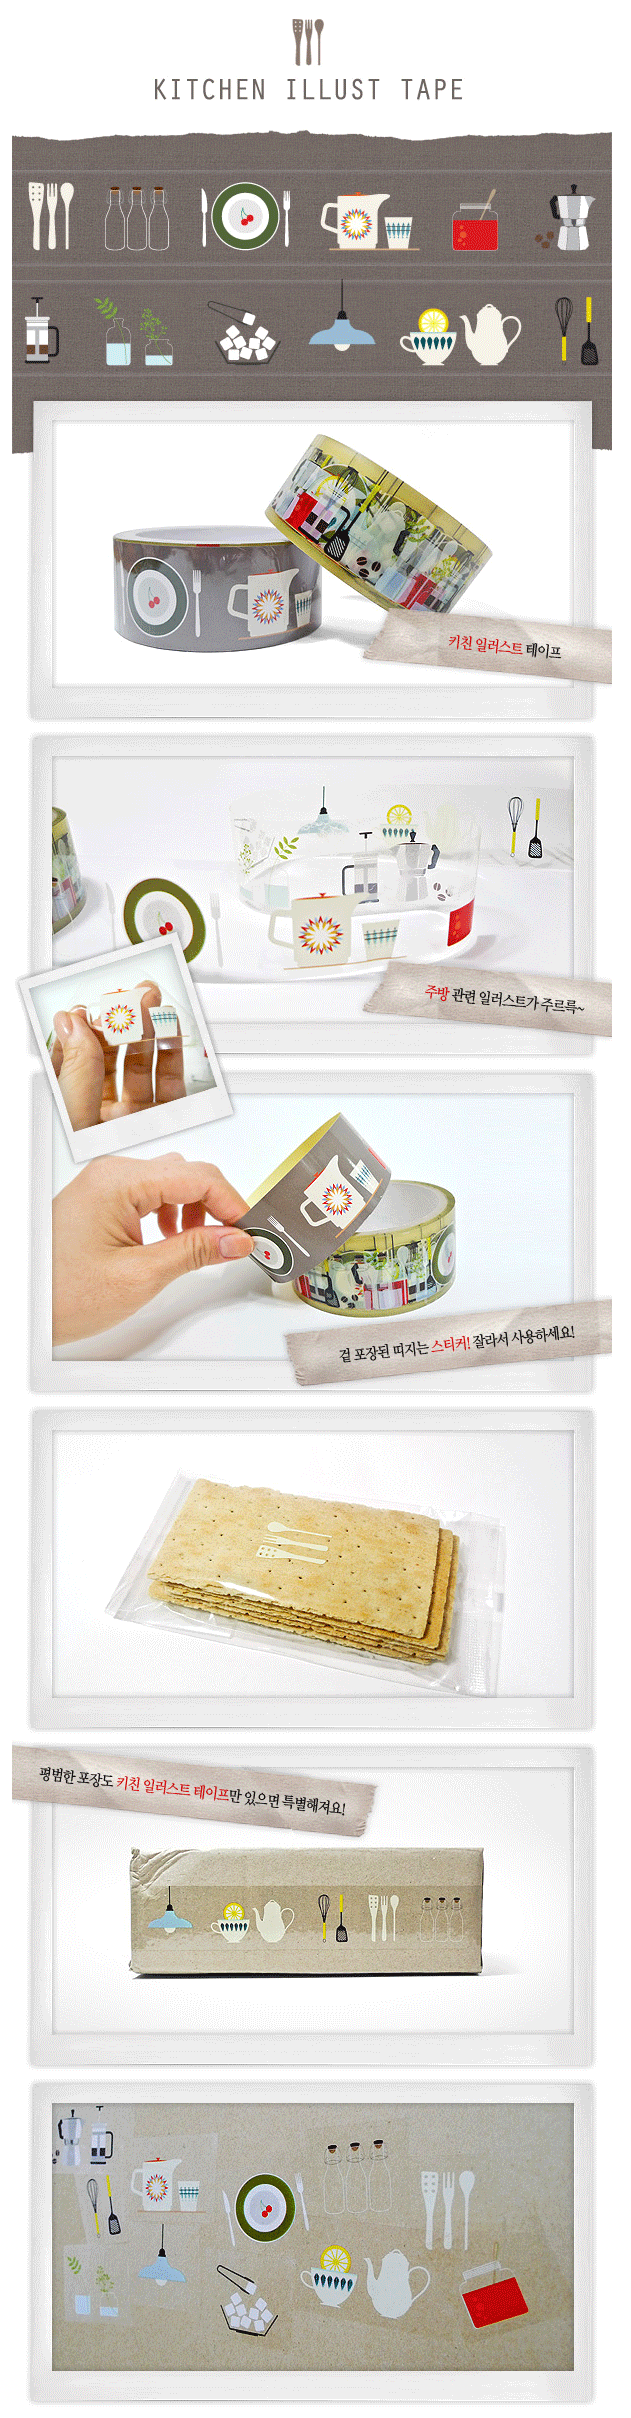 Korean stationer BBiddak's kitchen illustrated Tape [beautiful stationery, beautiful gift wrapping, stationery gifts, gorgeous stationery, unusual stationery]